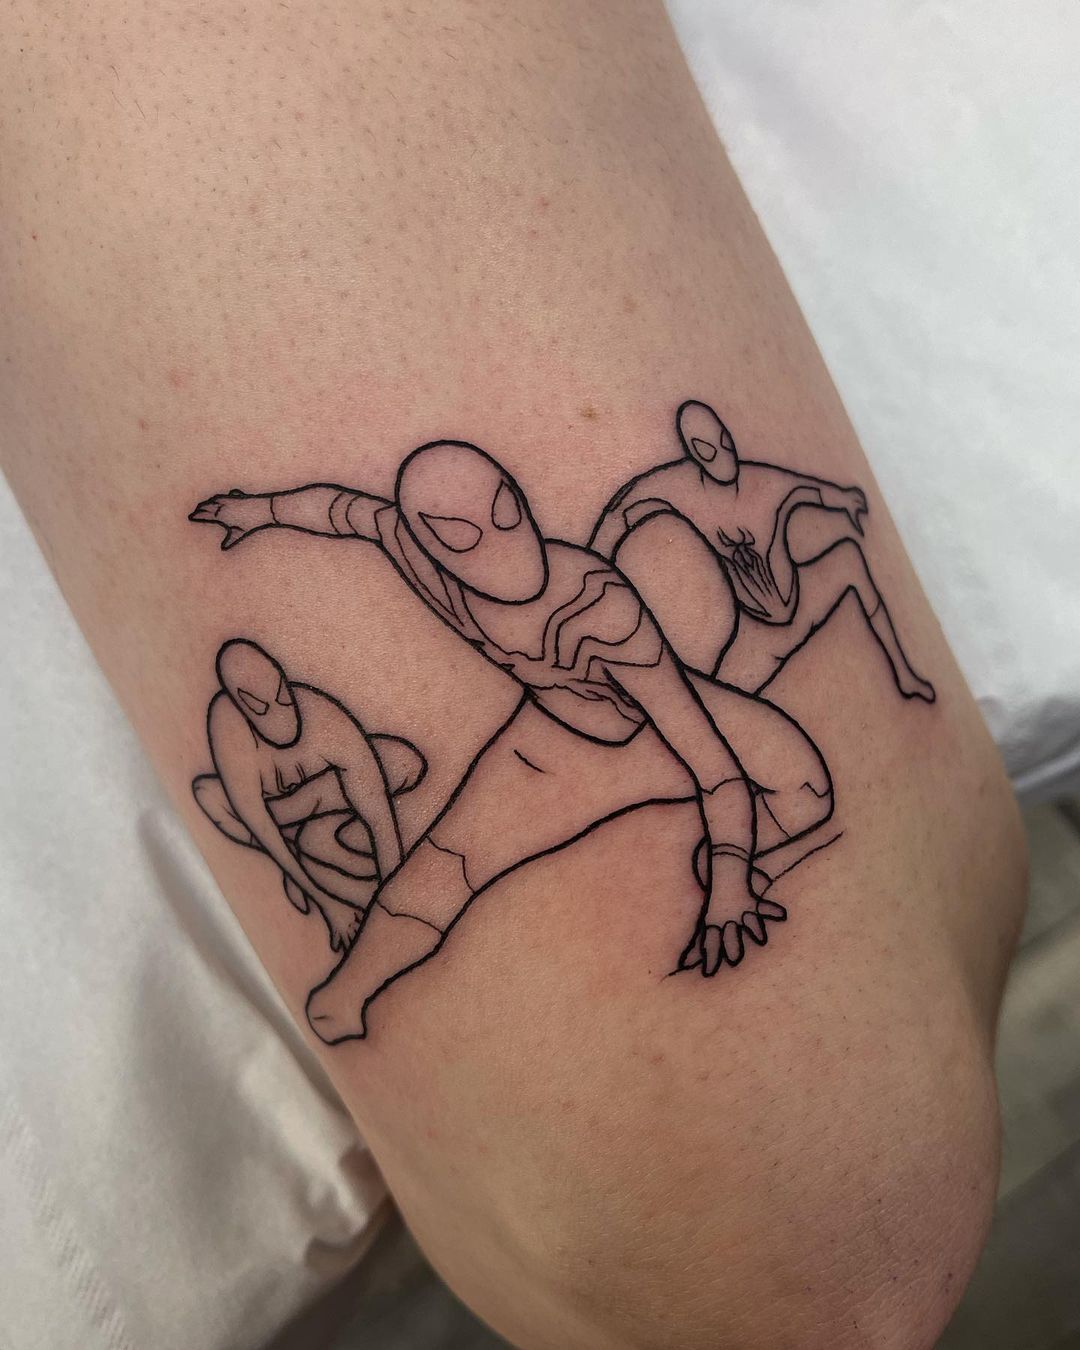 Share 167+ spiderman chest tattoo latest